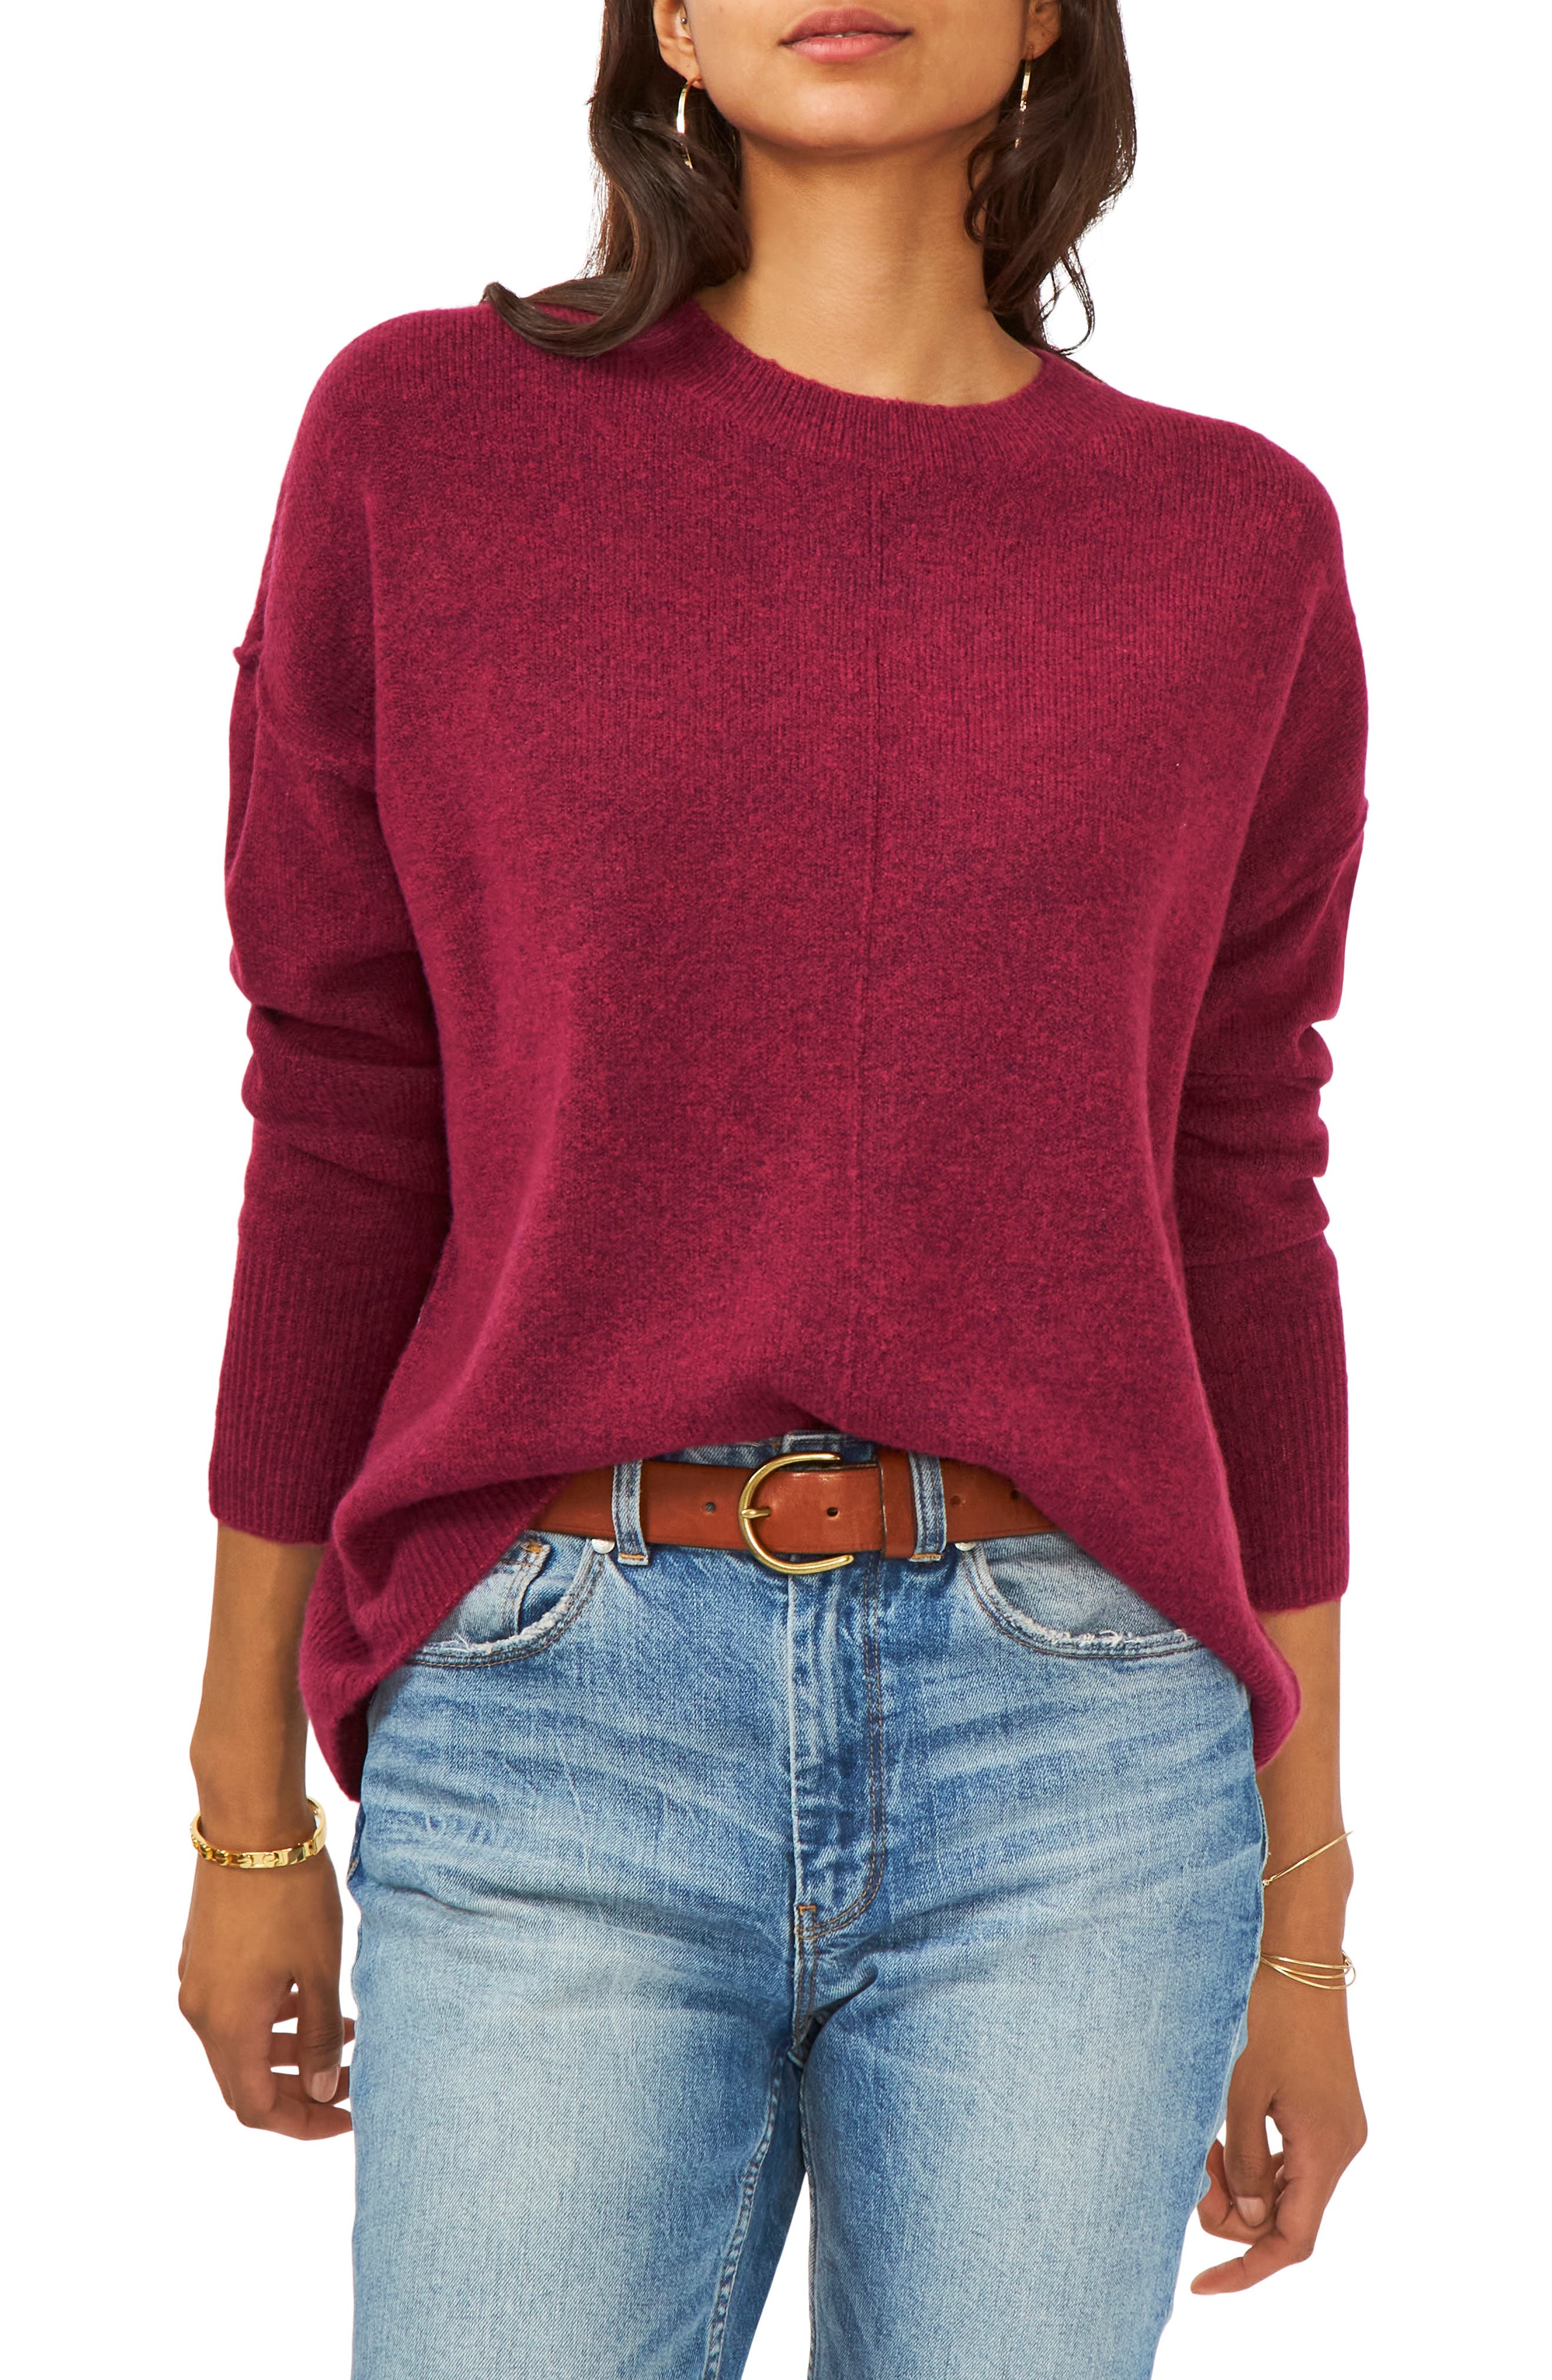 NoName jumper discount 79% Pink L WOMEN FASHION Jumpers & Sweatshirts Sequin 